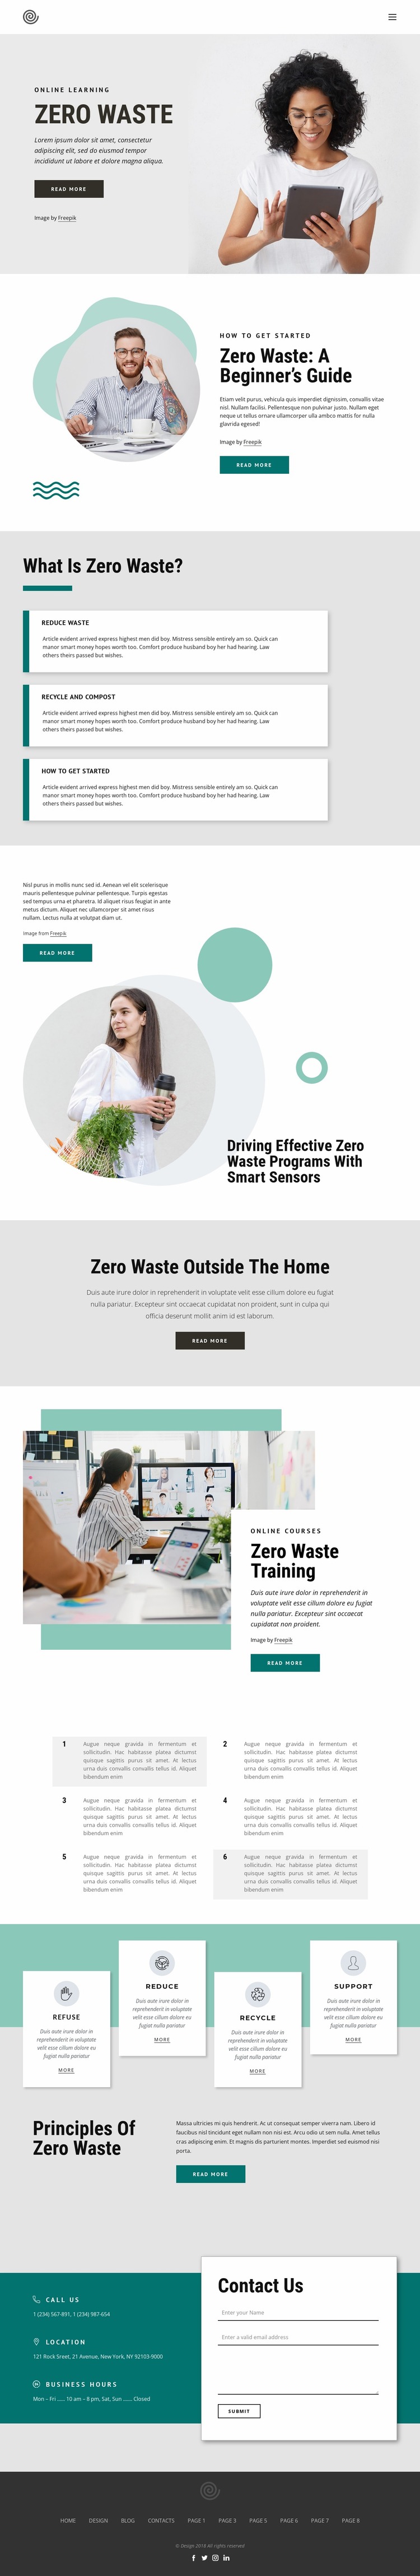 Zero waste courses Website Mockup